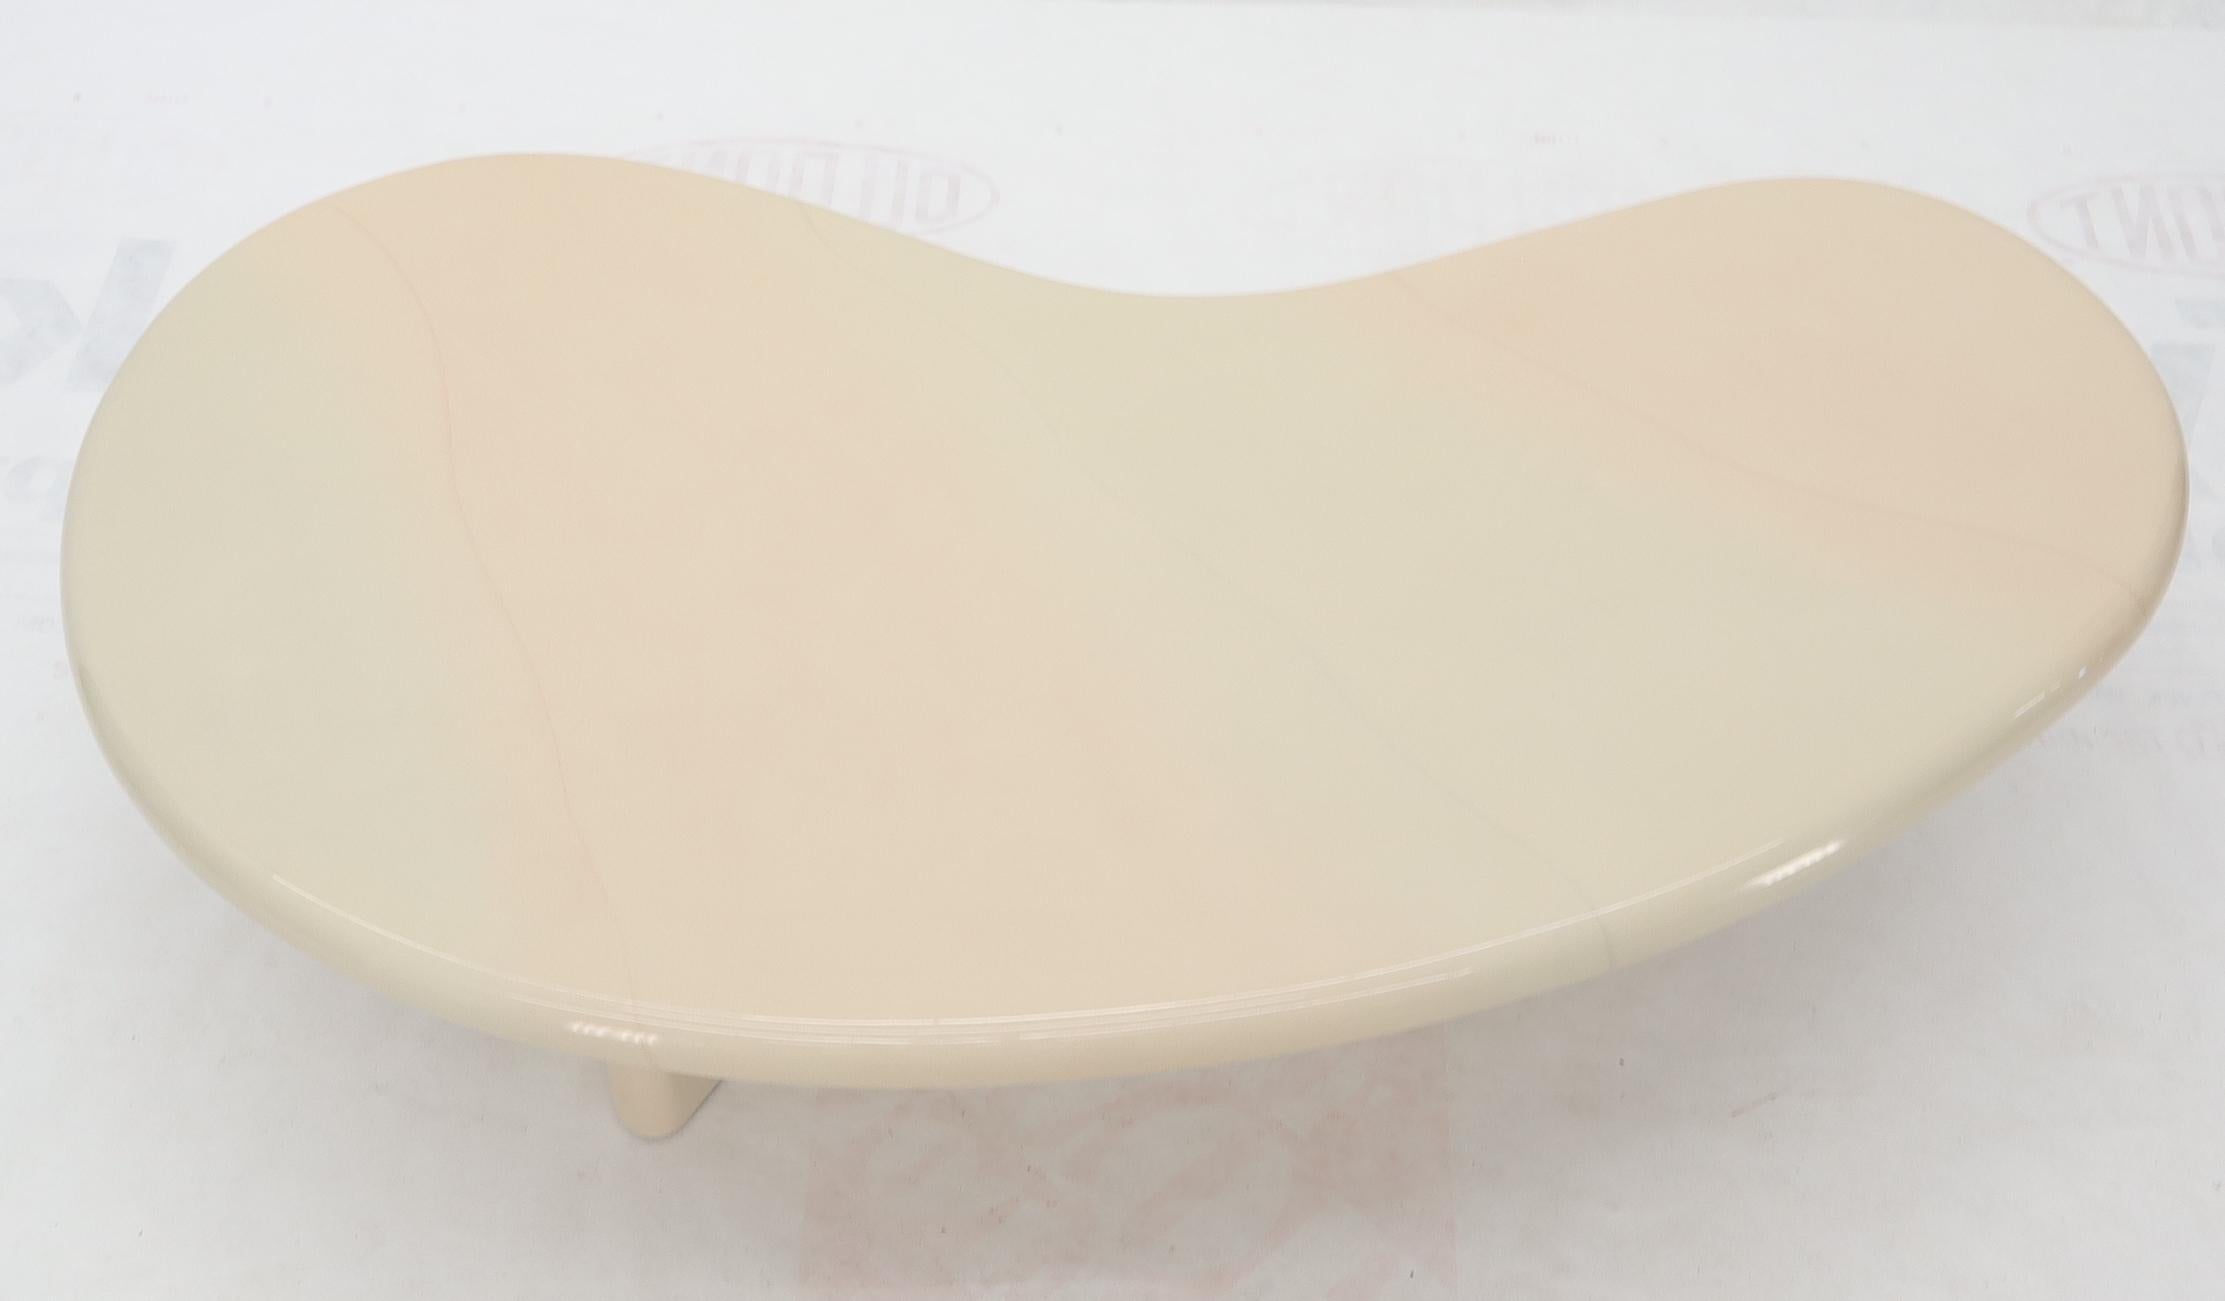 organic shaped coffee table